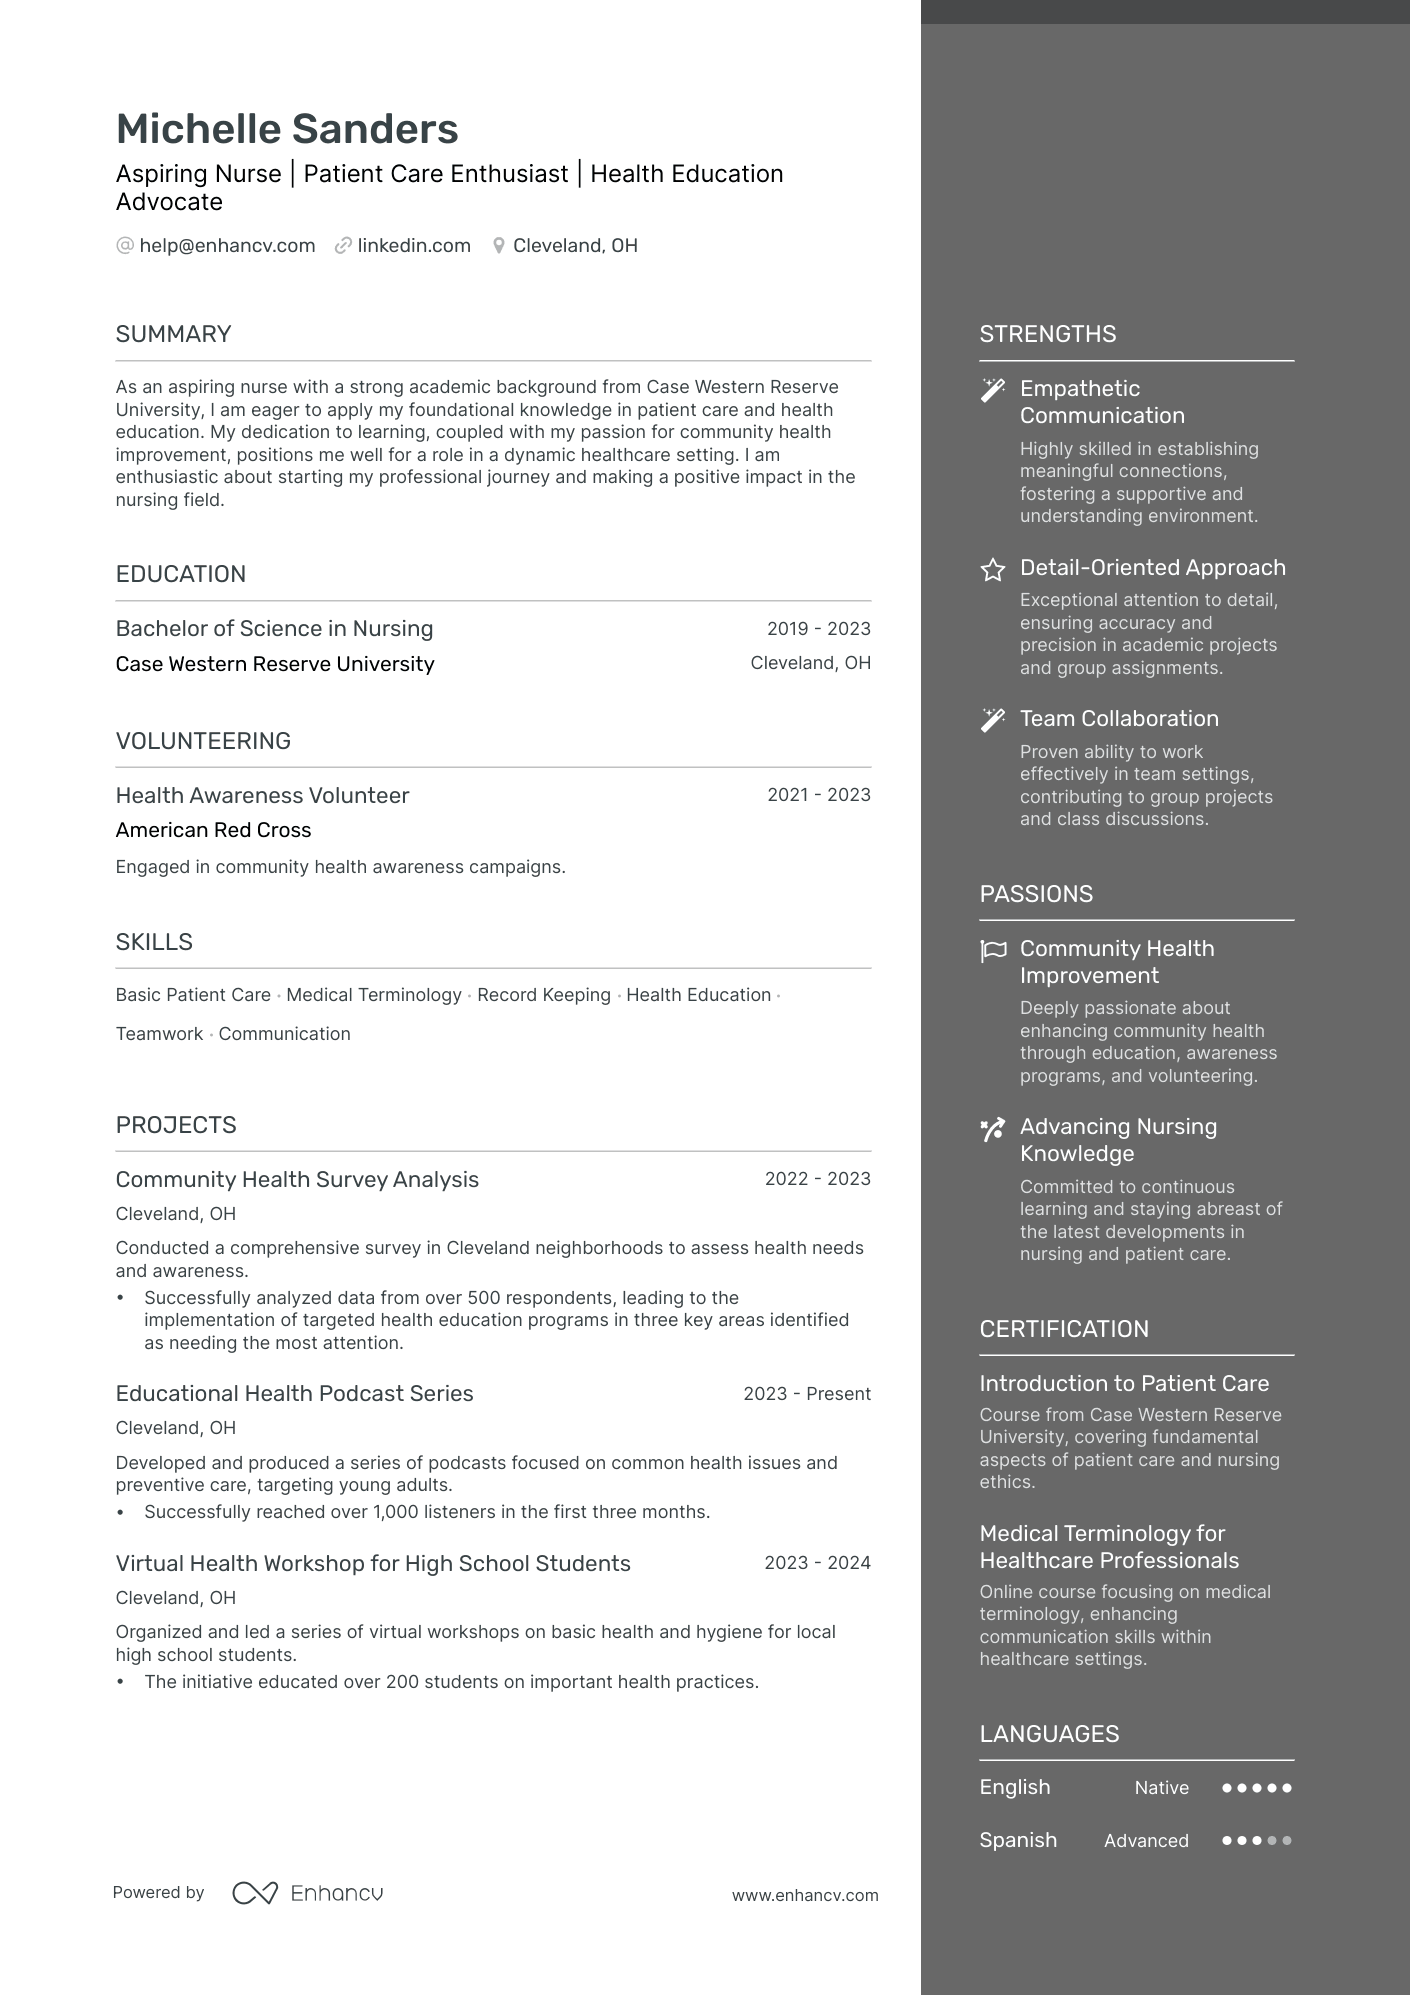 nursing student description for resume